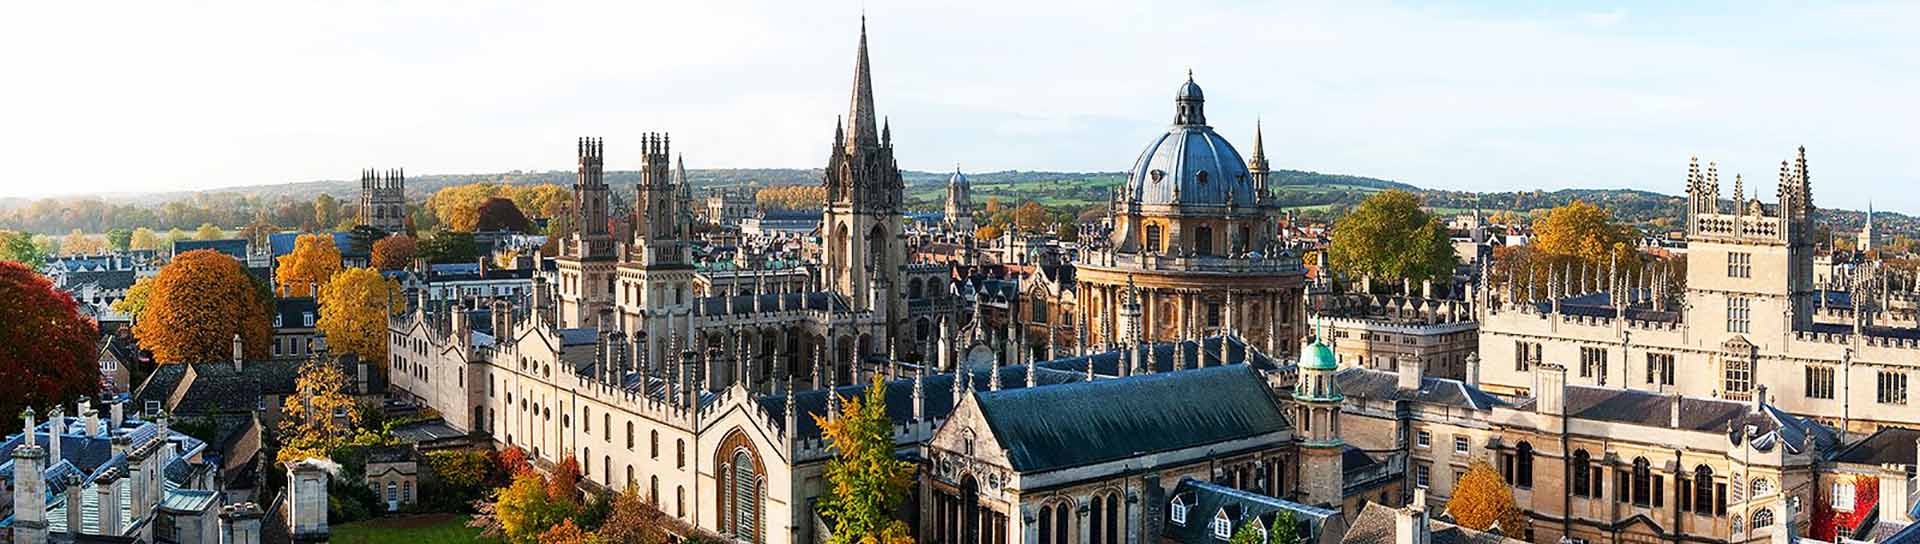 Oxford University (c) Oxford University, UK